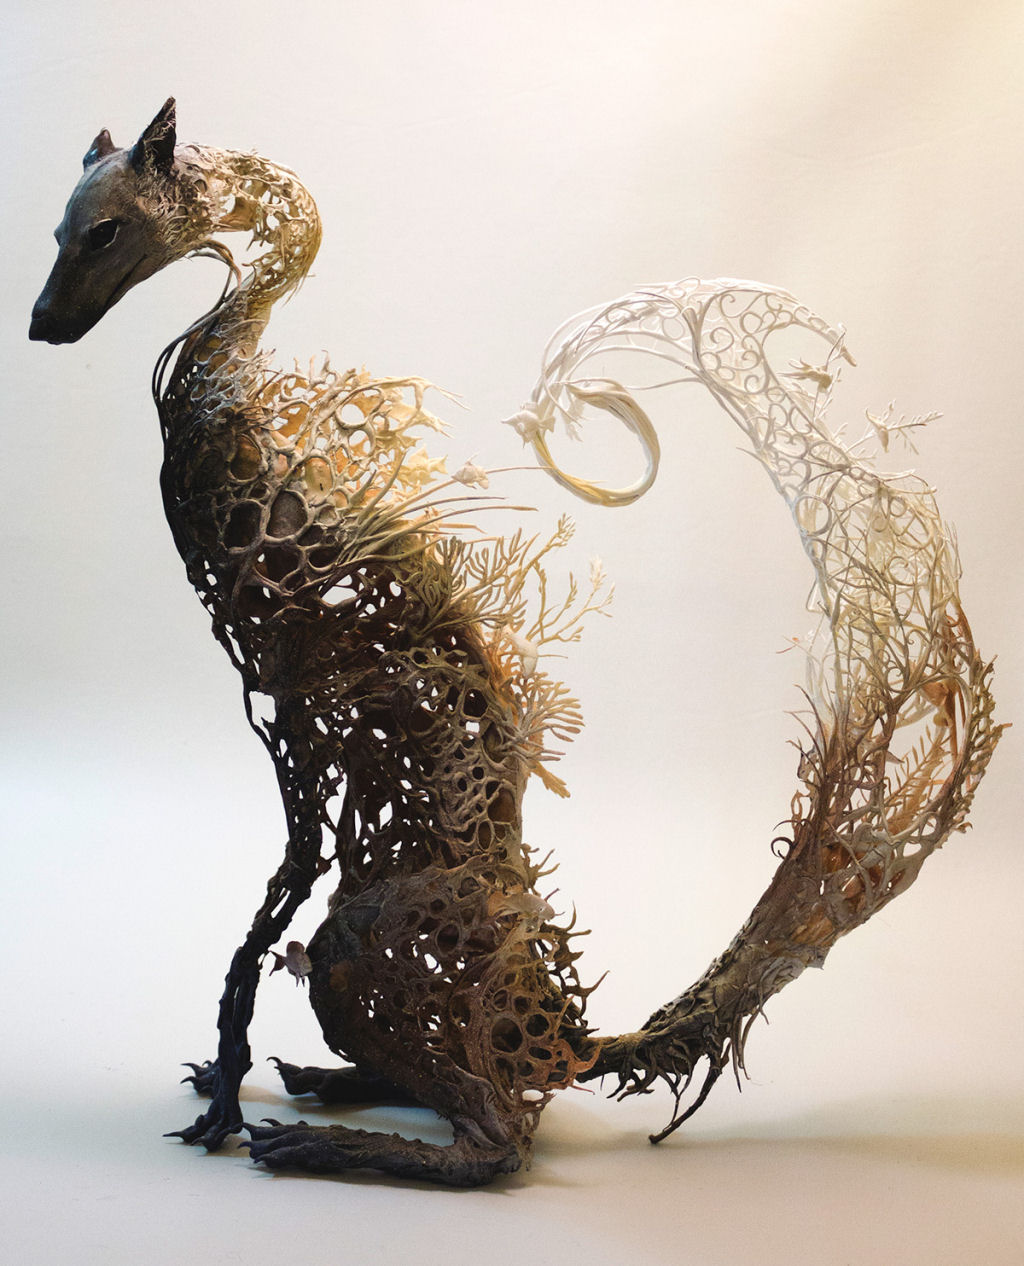 As esculturas surrealistas de Ellen Jewett mesclam plantas e vida animal 02